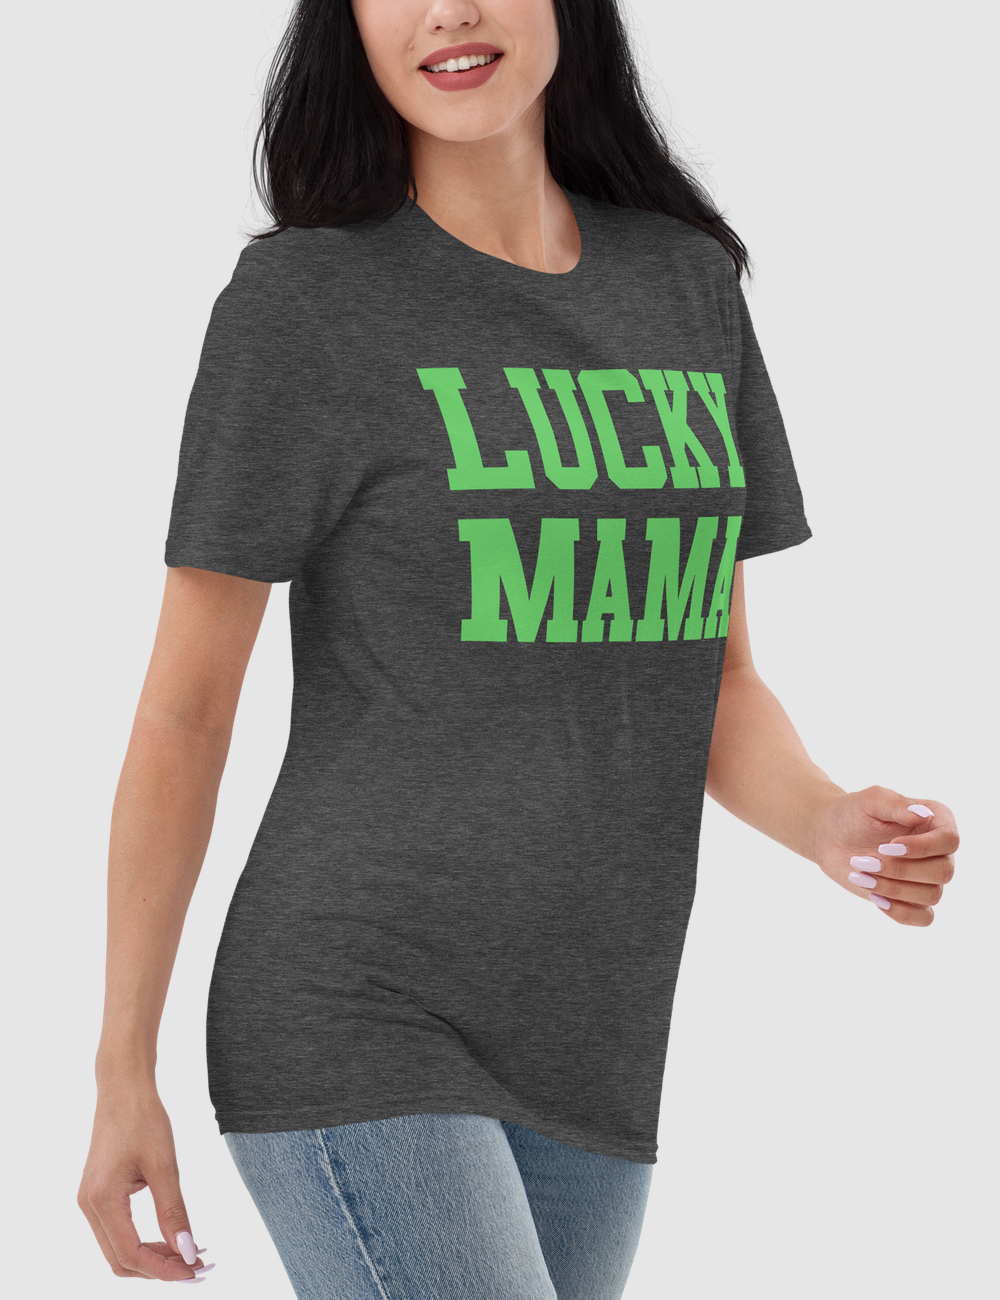 Lucky Mama Women's Relaxed T-Shirt OniTakai